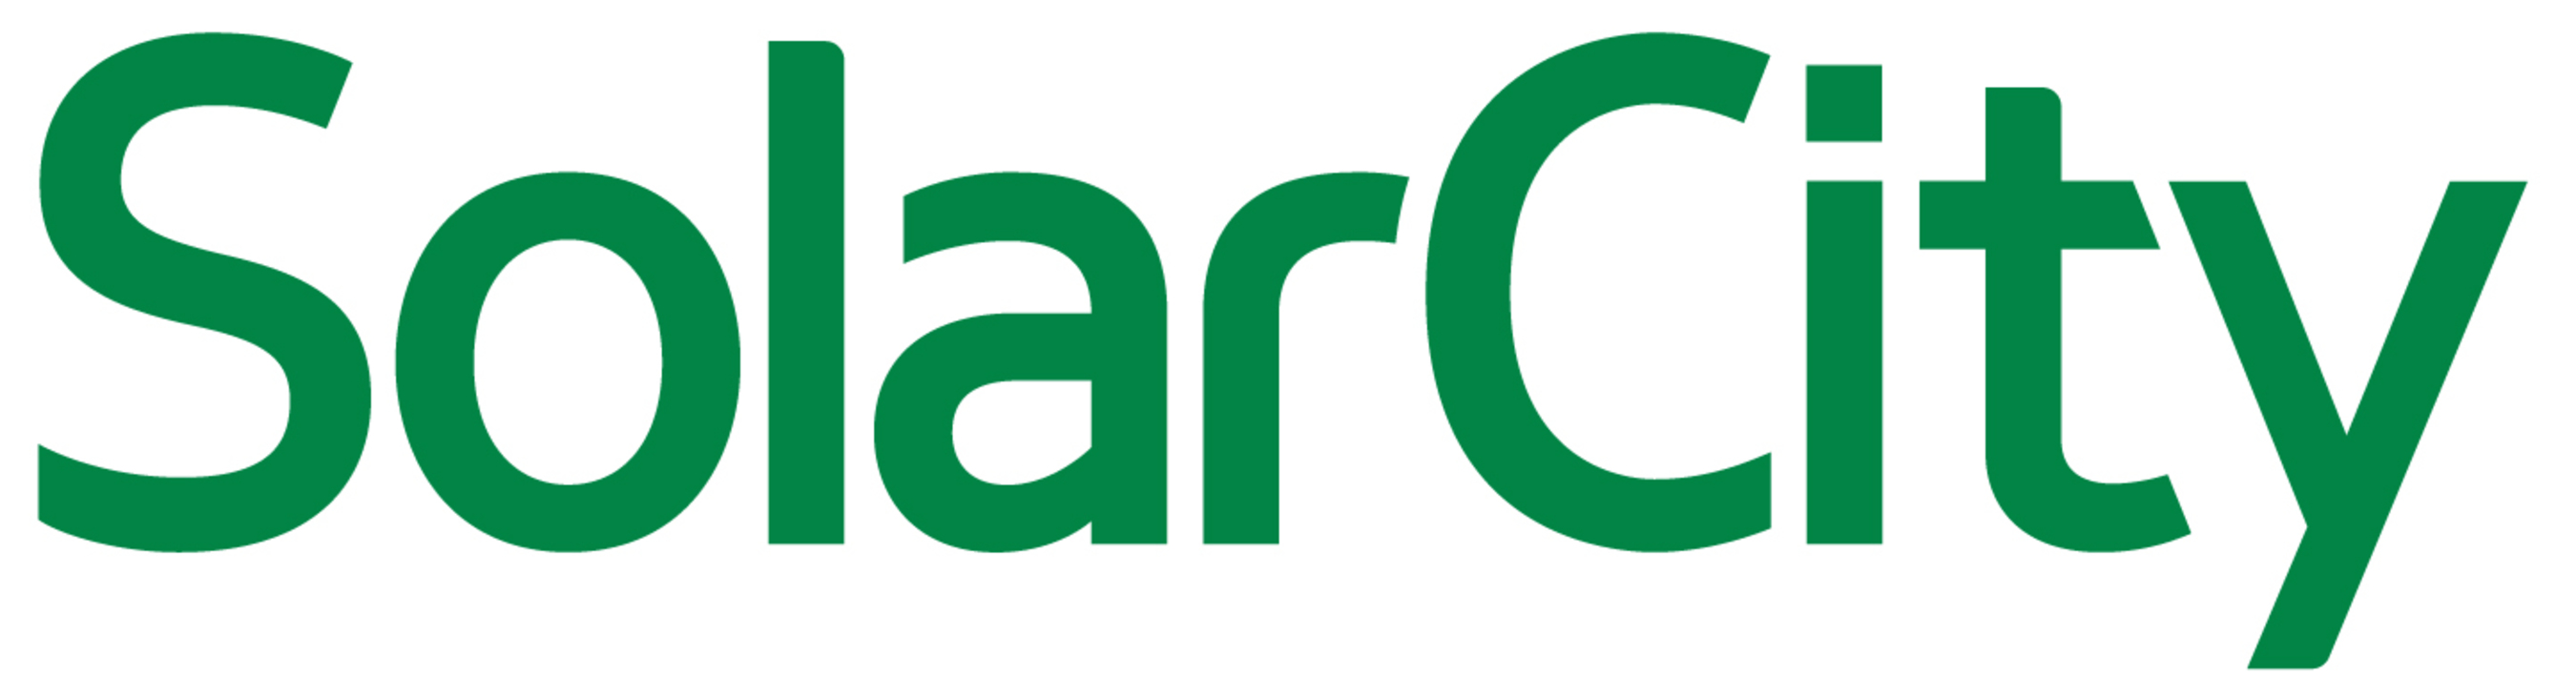 SolarCity logo.